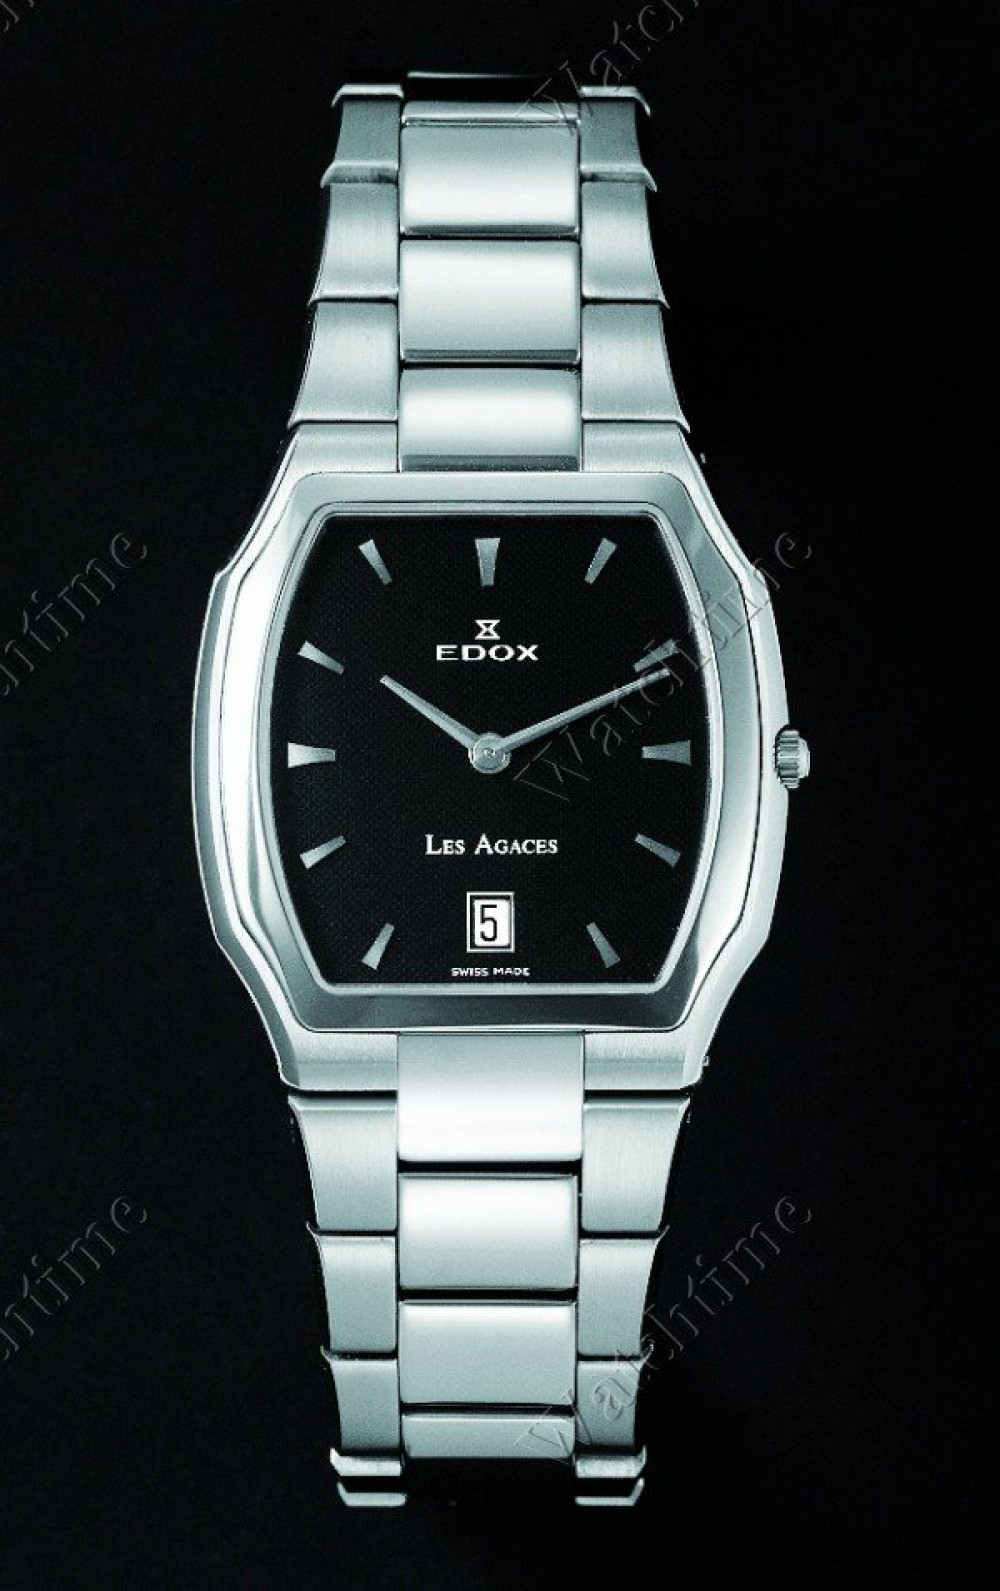 Zegarek firmy Edox, model Les Agaces